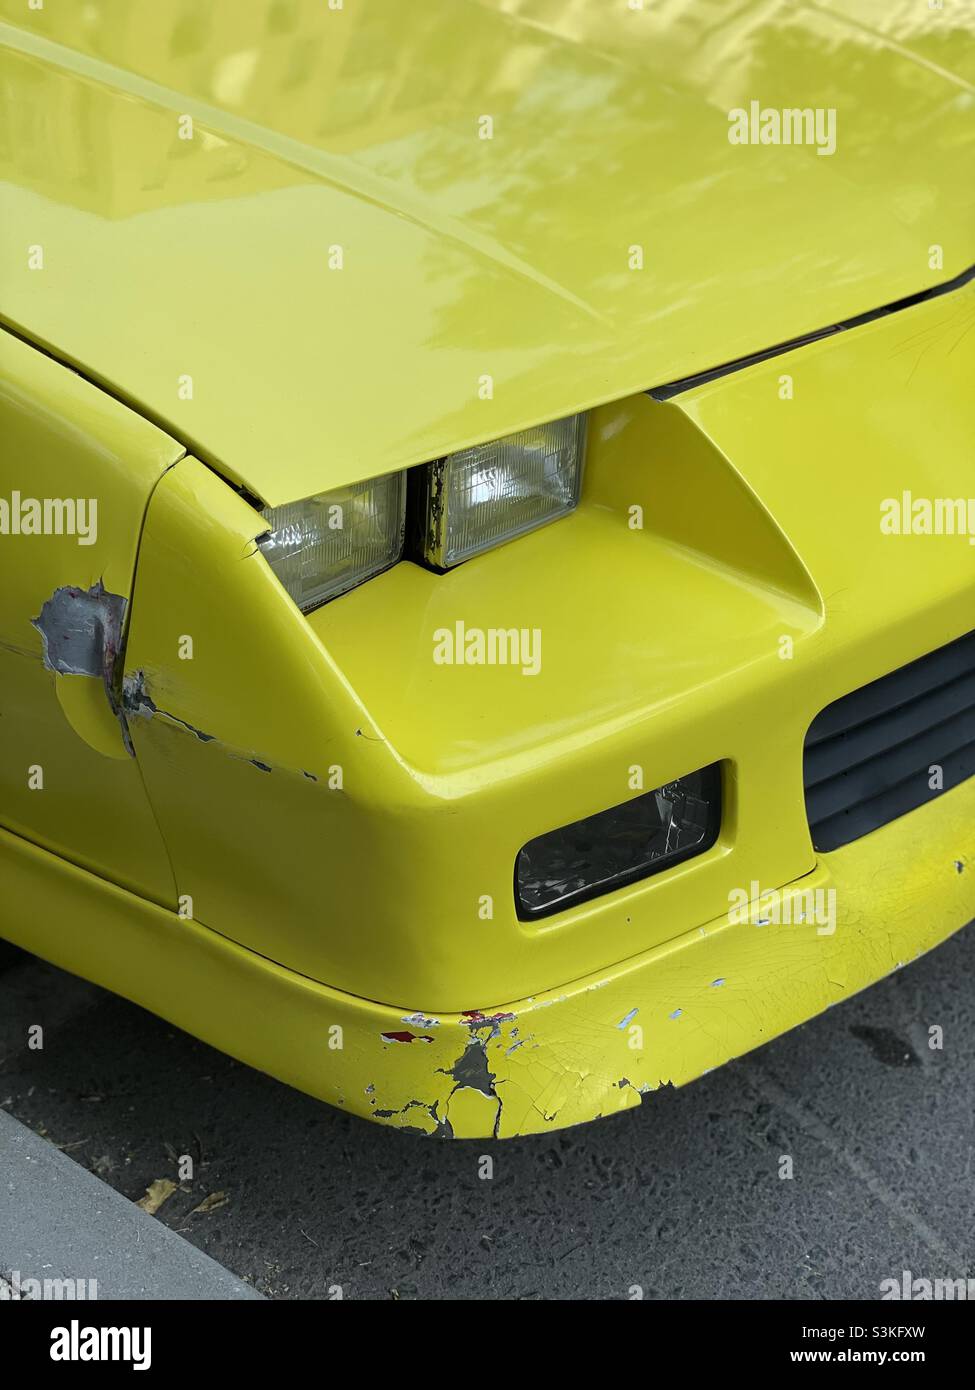 Yellow car broke Stock Photo